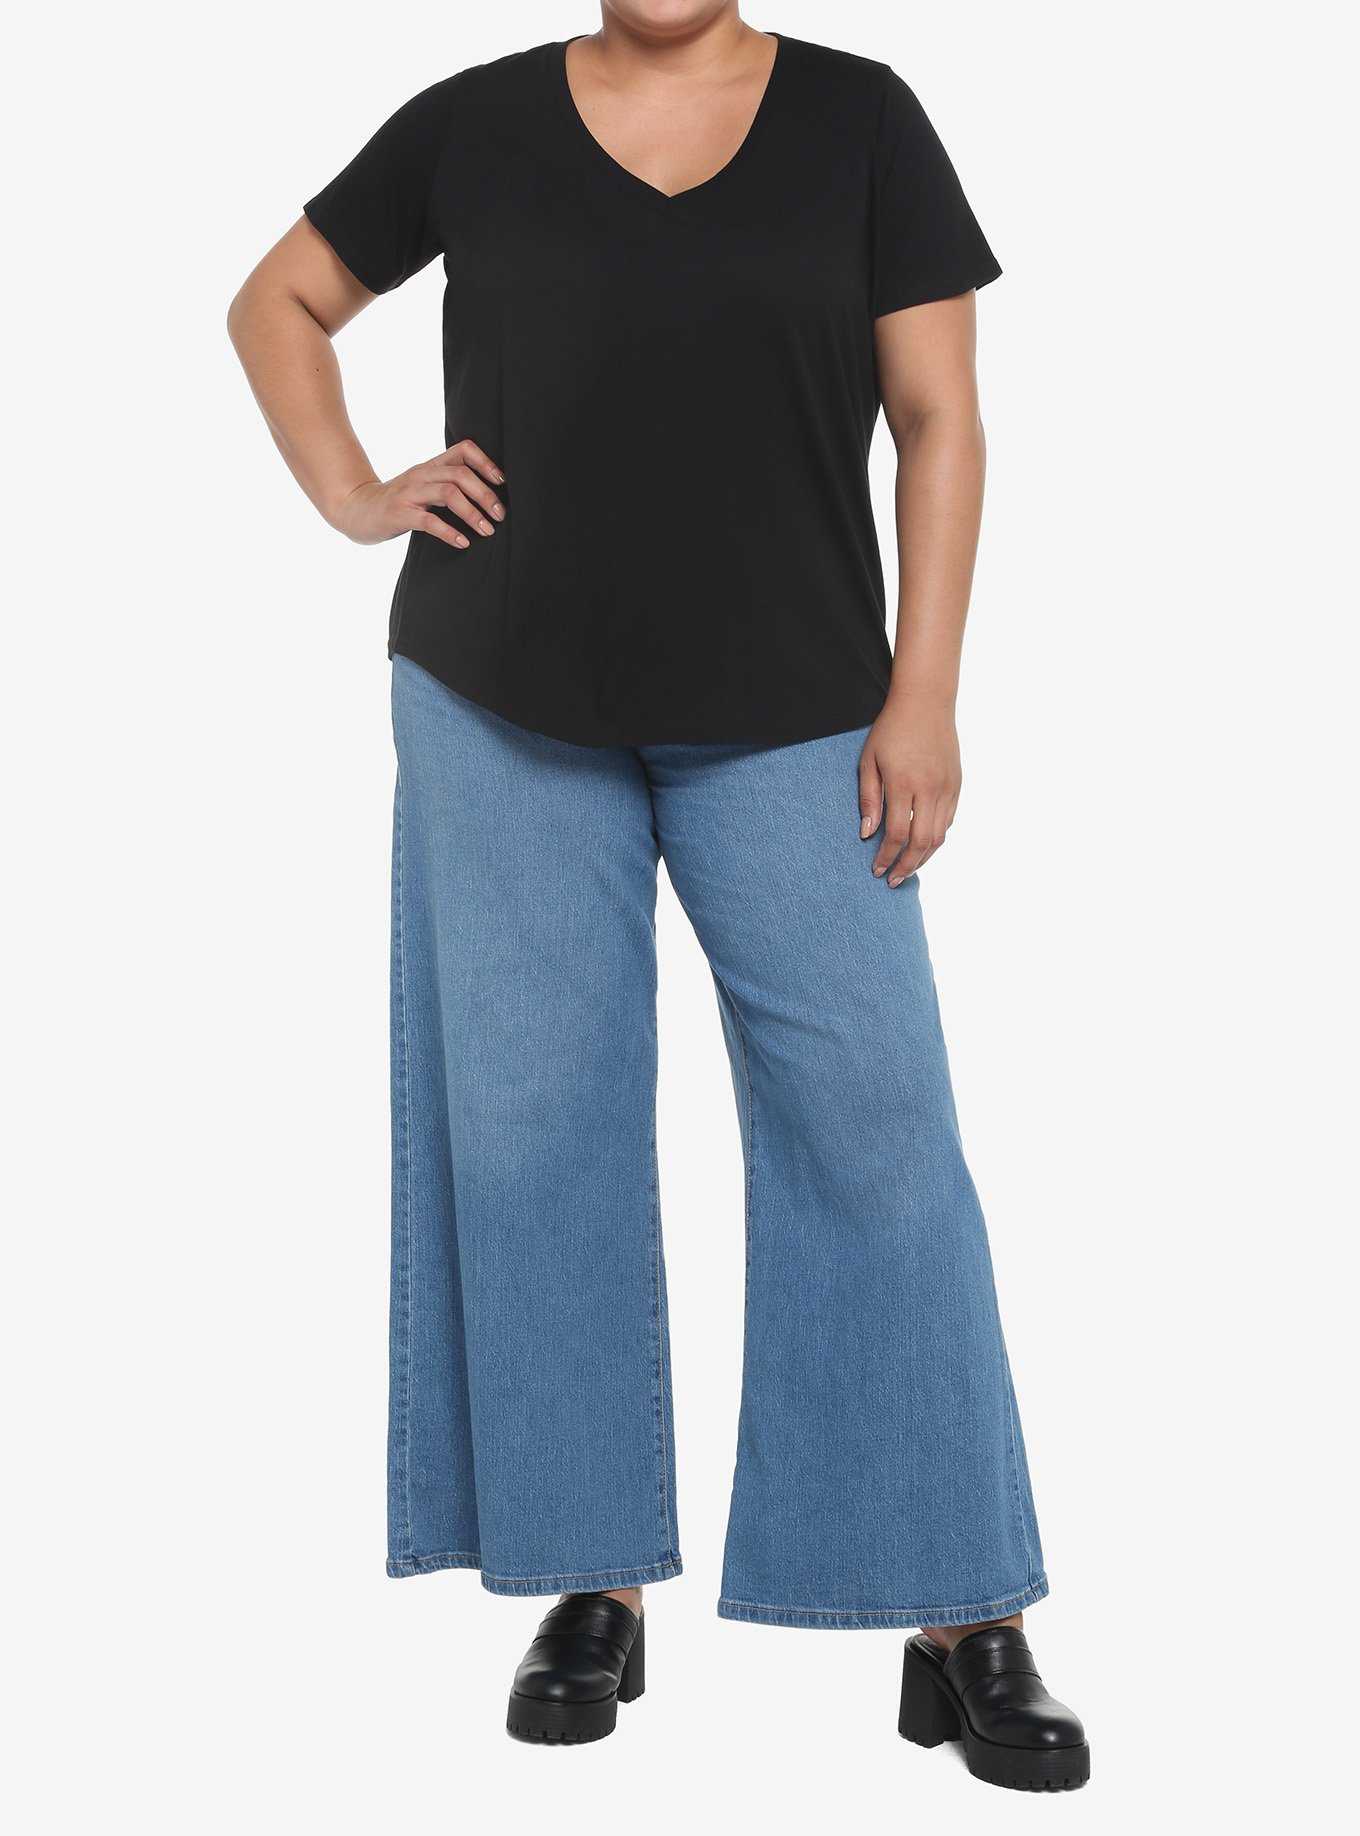 Her Universe Black V-Neck Favorite T-Shirt Plus Size, , hi-res